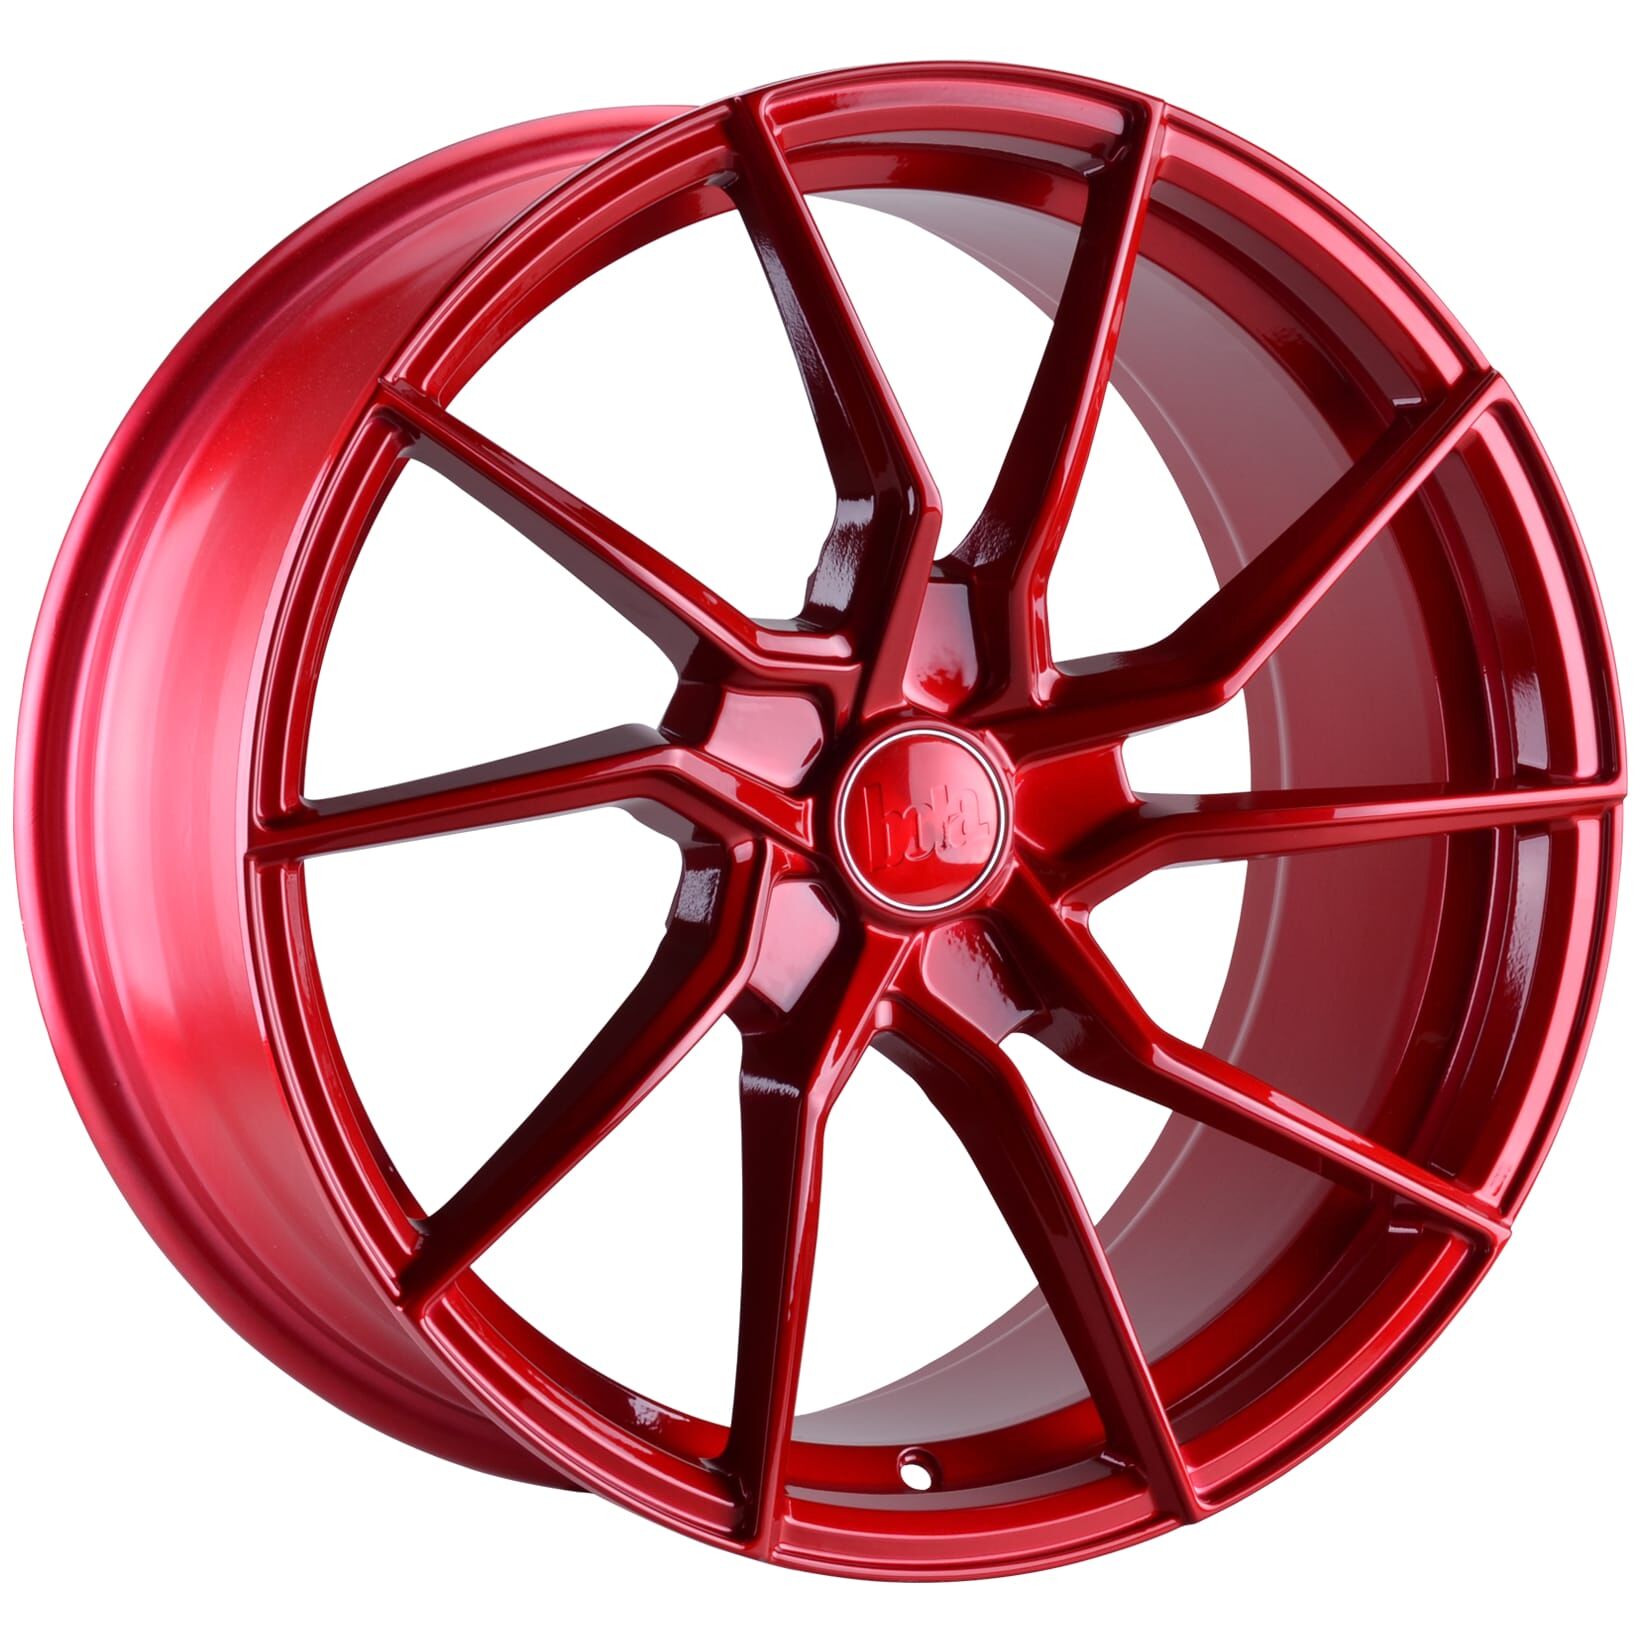 18" BOLA B25 Wheels - Candy Red - VW / Audi / Mercedes - 5x112